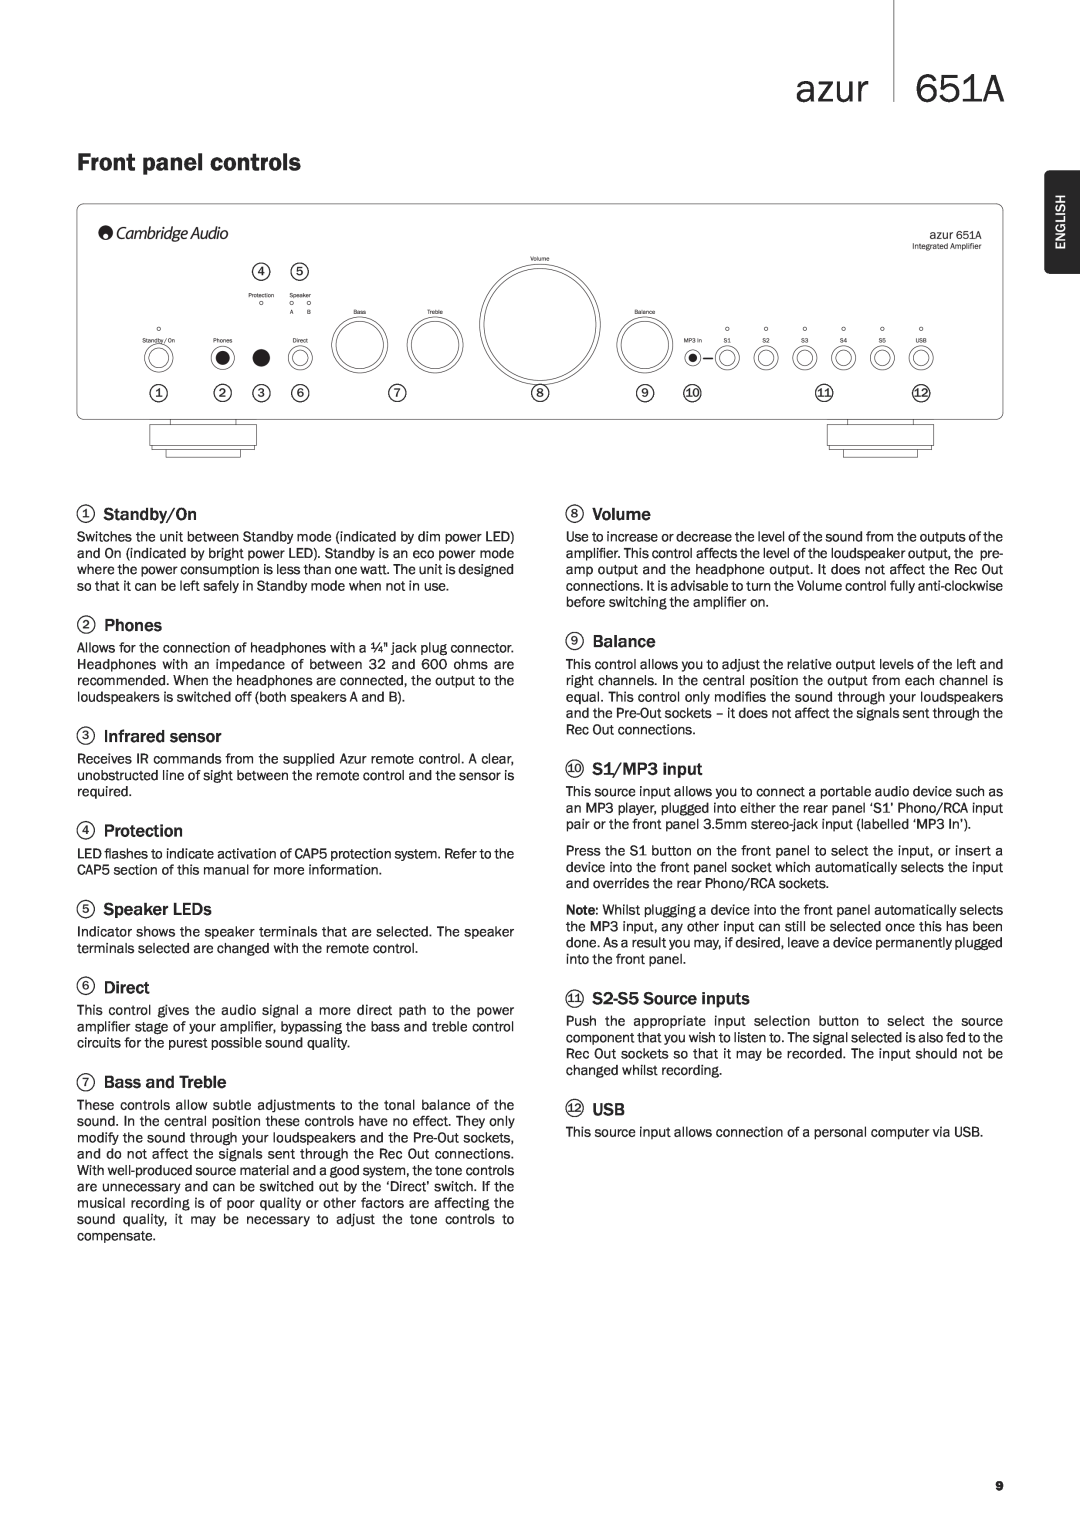 Cambridge Audio user manual Front panel controls, azur 651A 